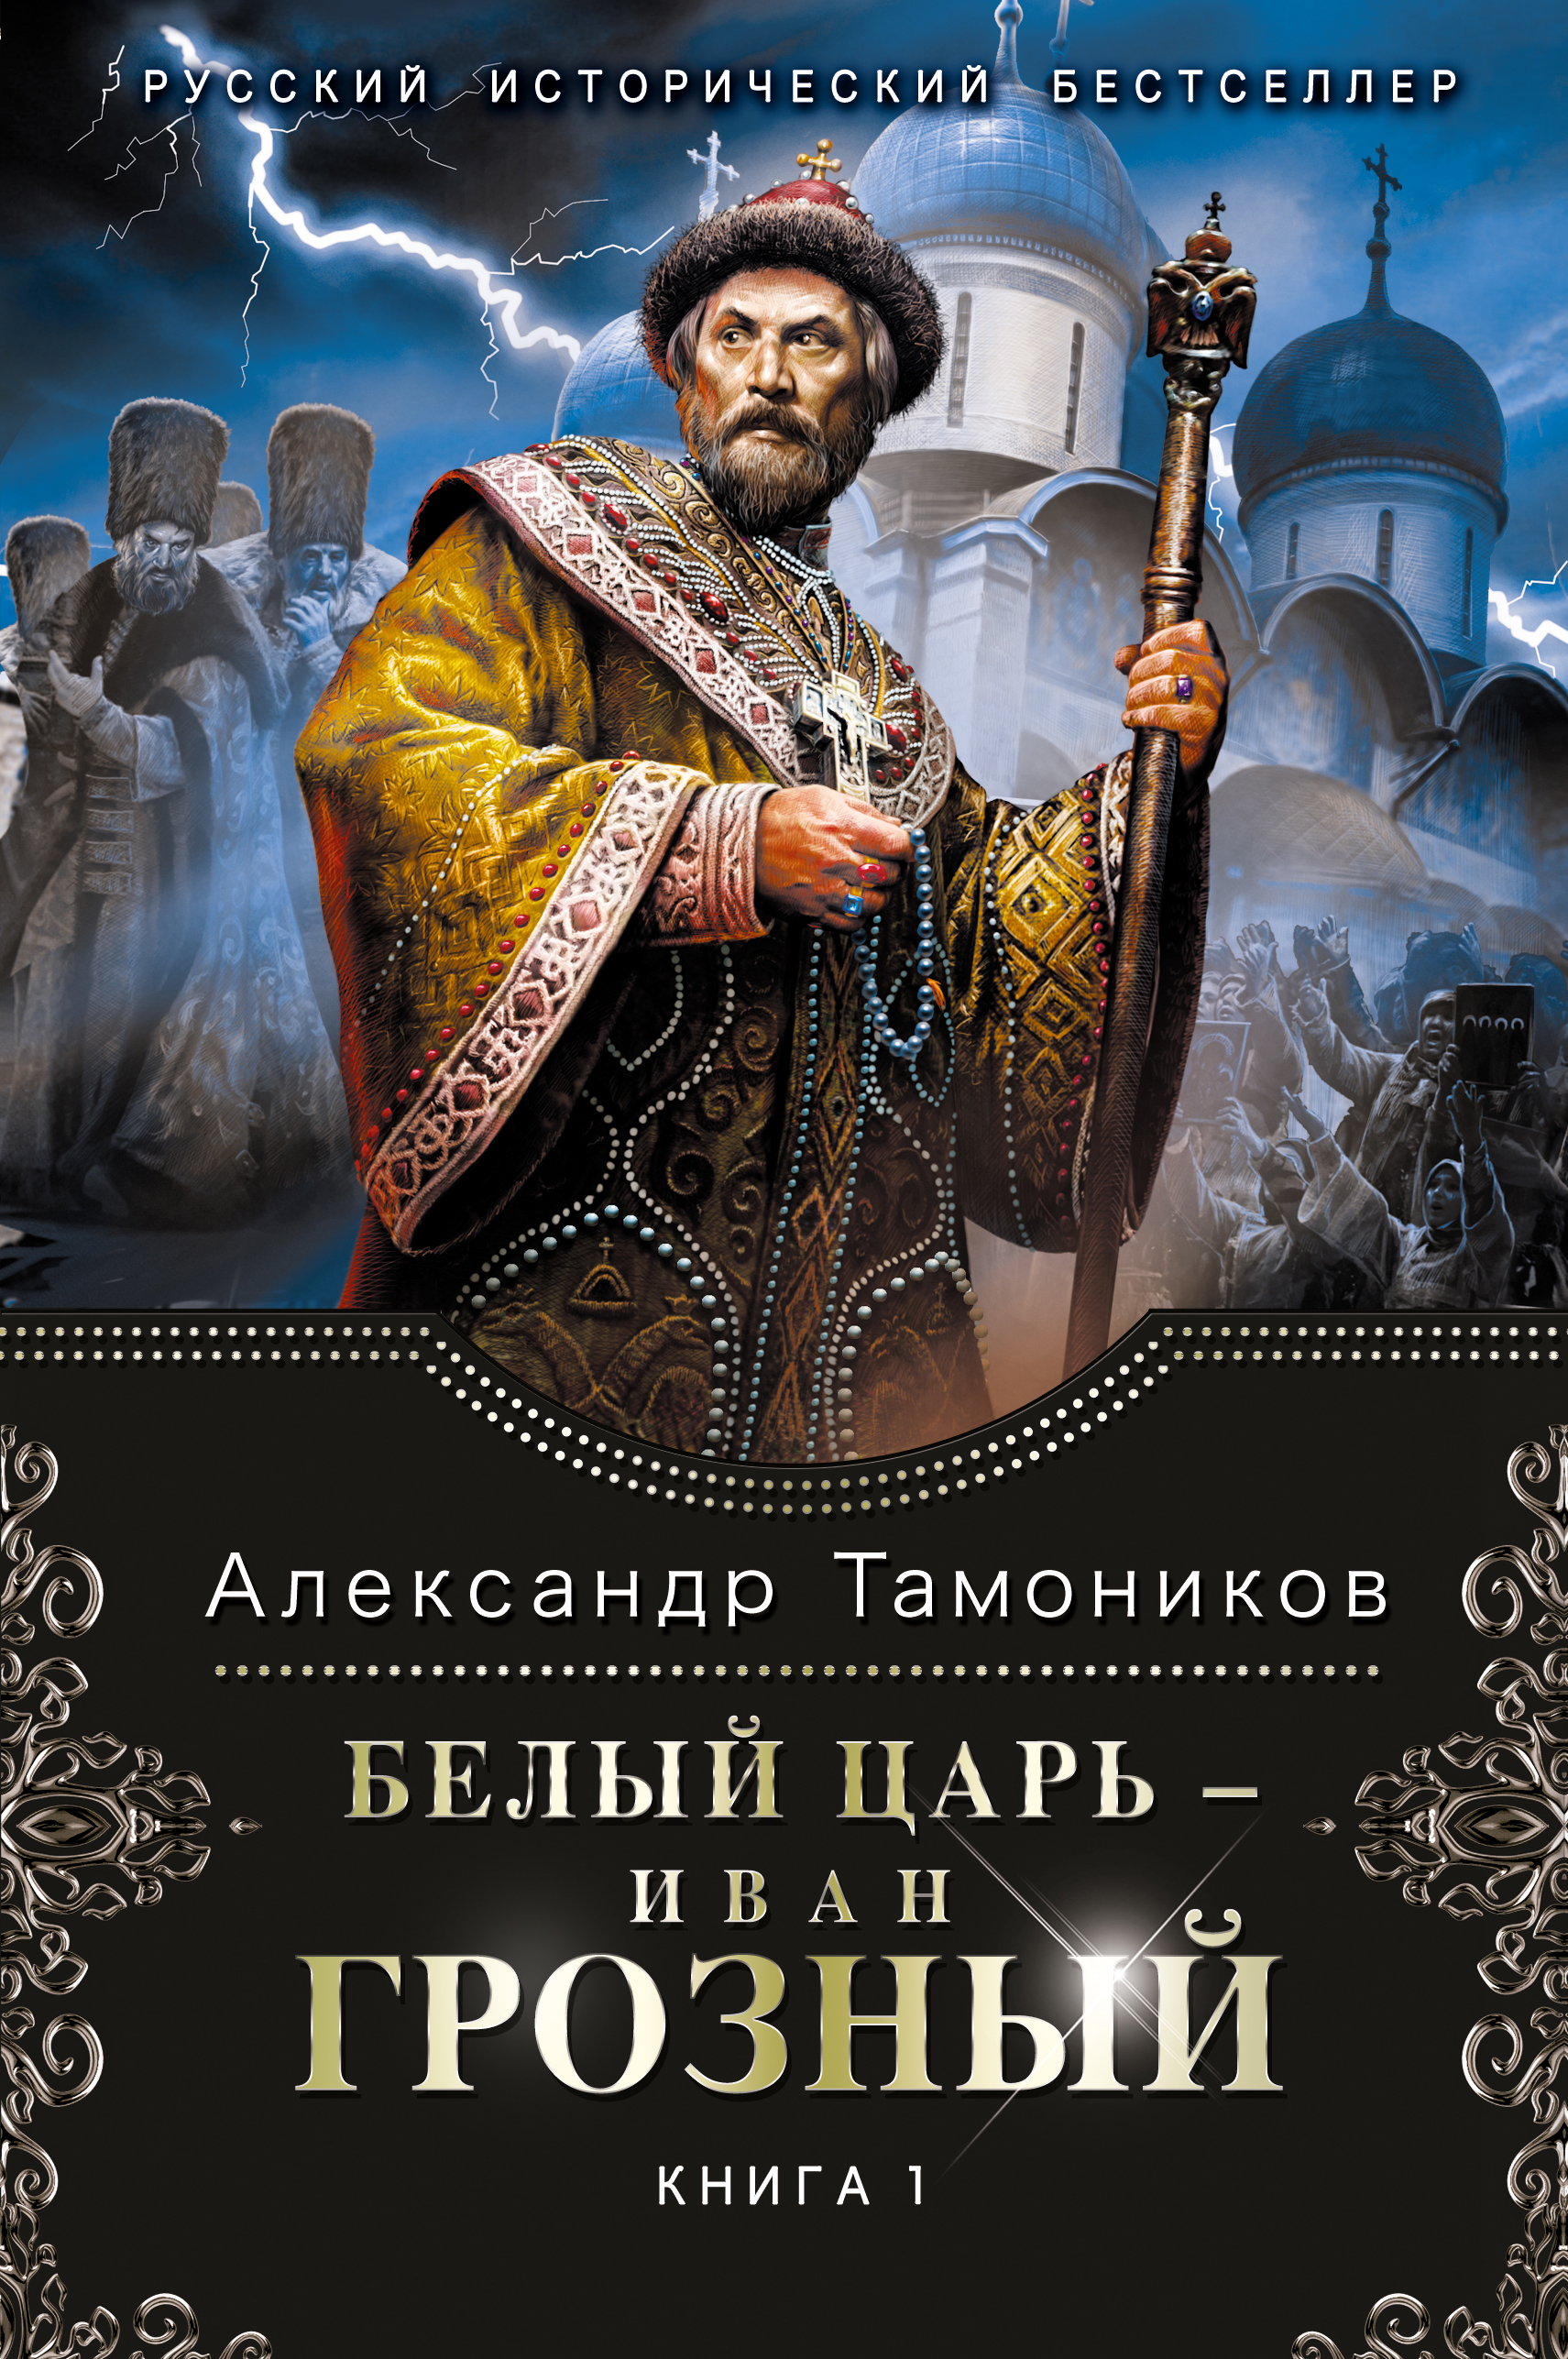 Книги про ивана грозного. Царь-книга Ивана Грозного. Исторические романы книги.